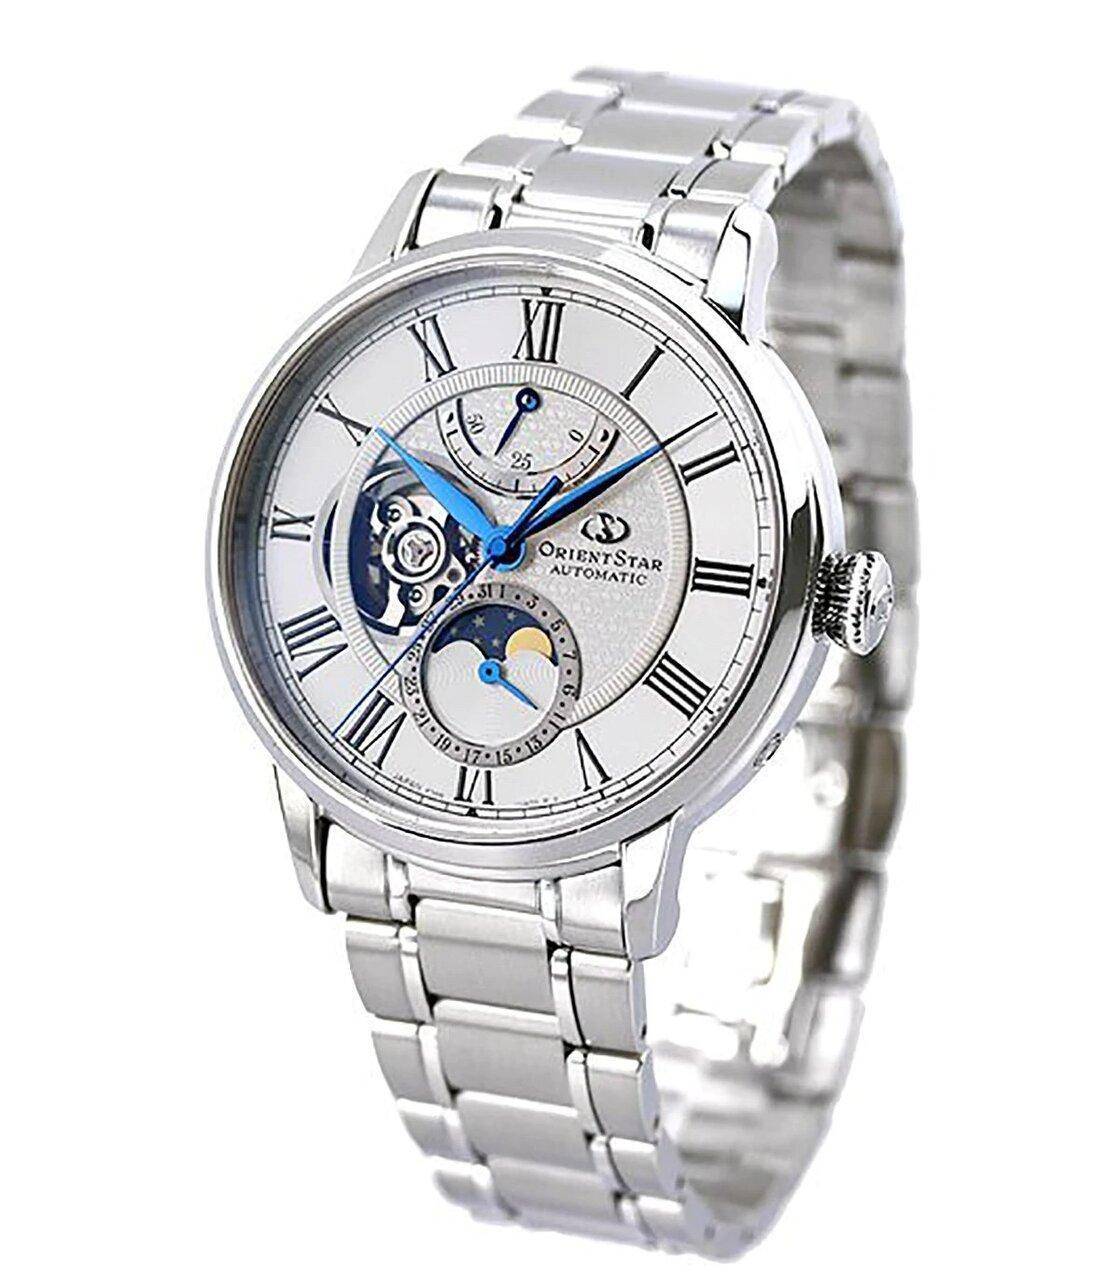 reloj-automatico-hombre-orient-star-re-ay0102s-dial-blanco-41mm-fases-lunares-cristal-de-zafir...jpg